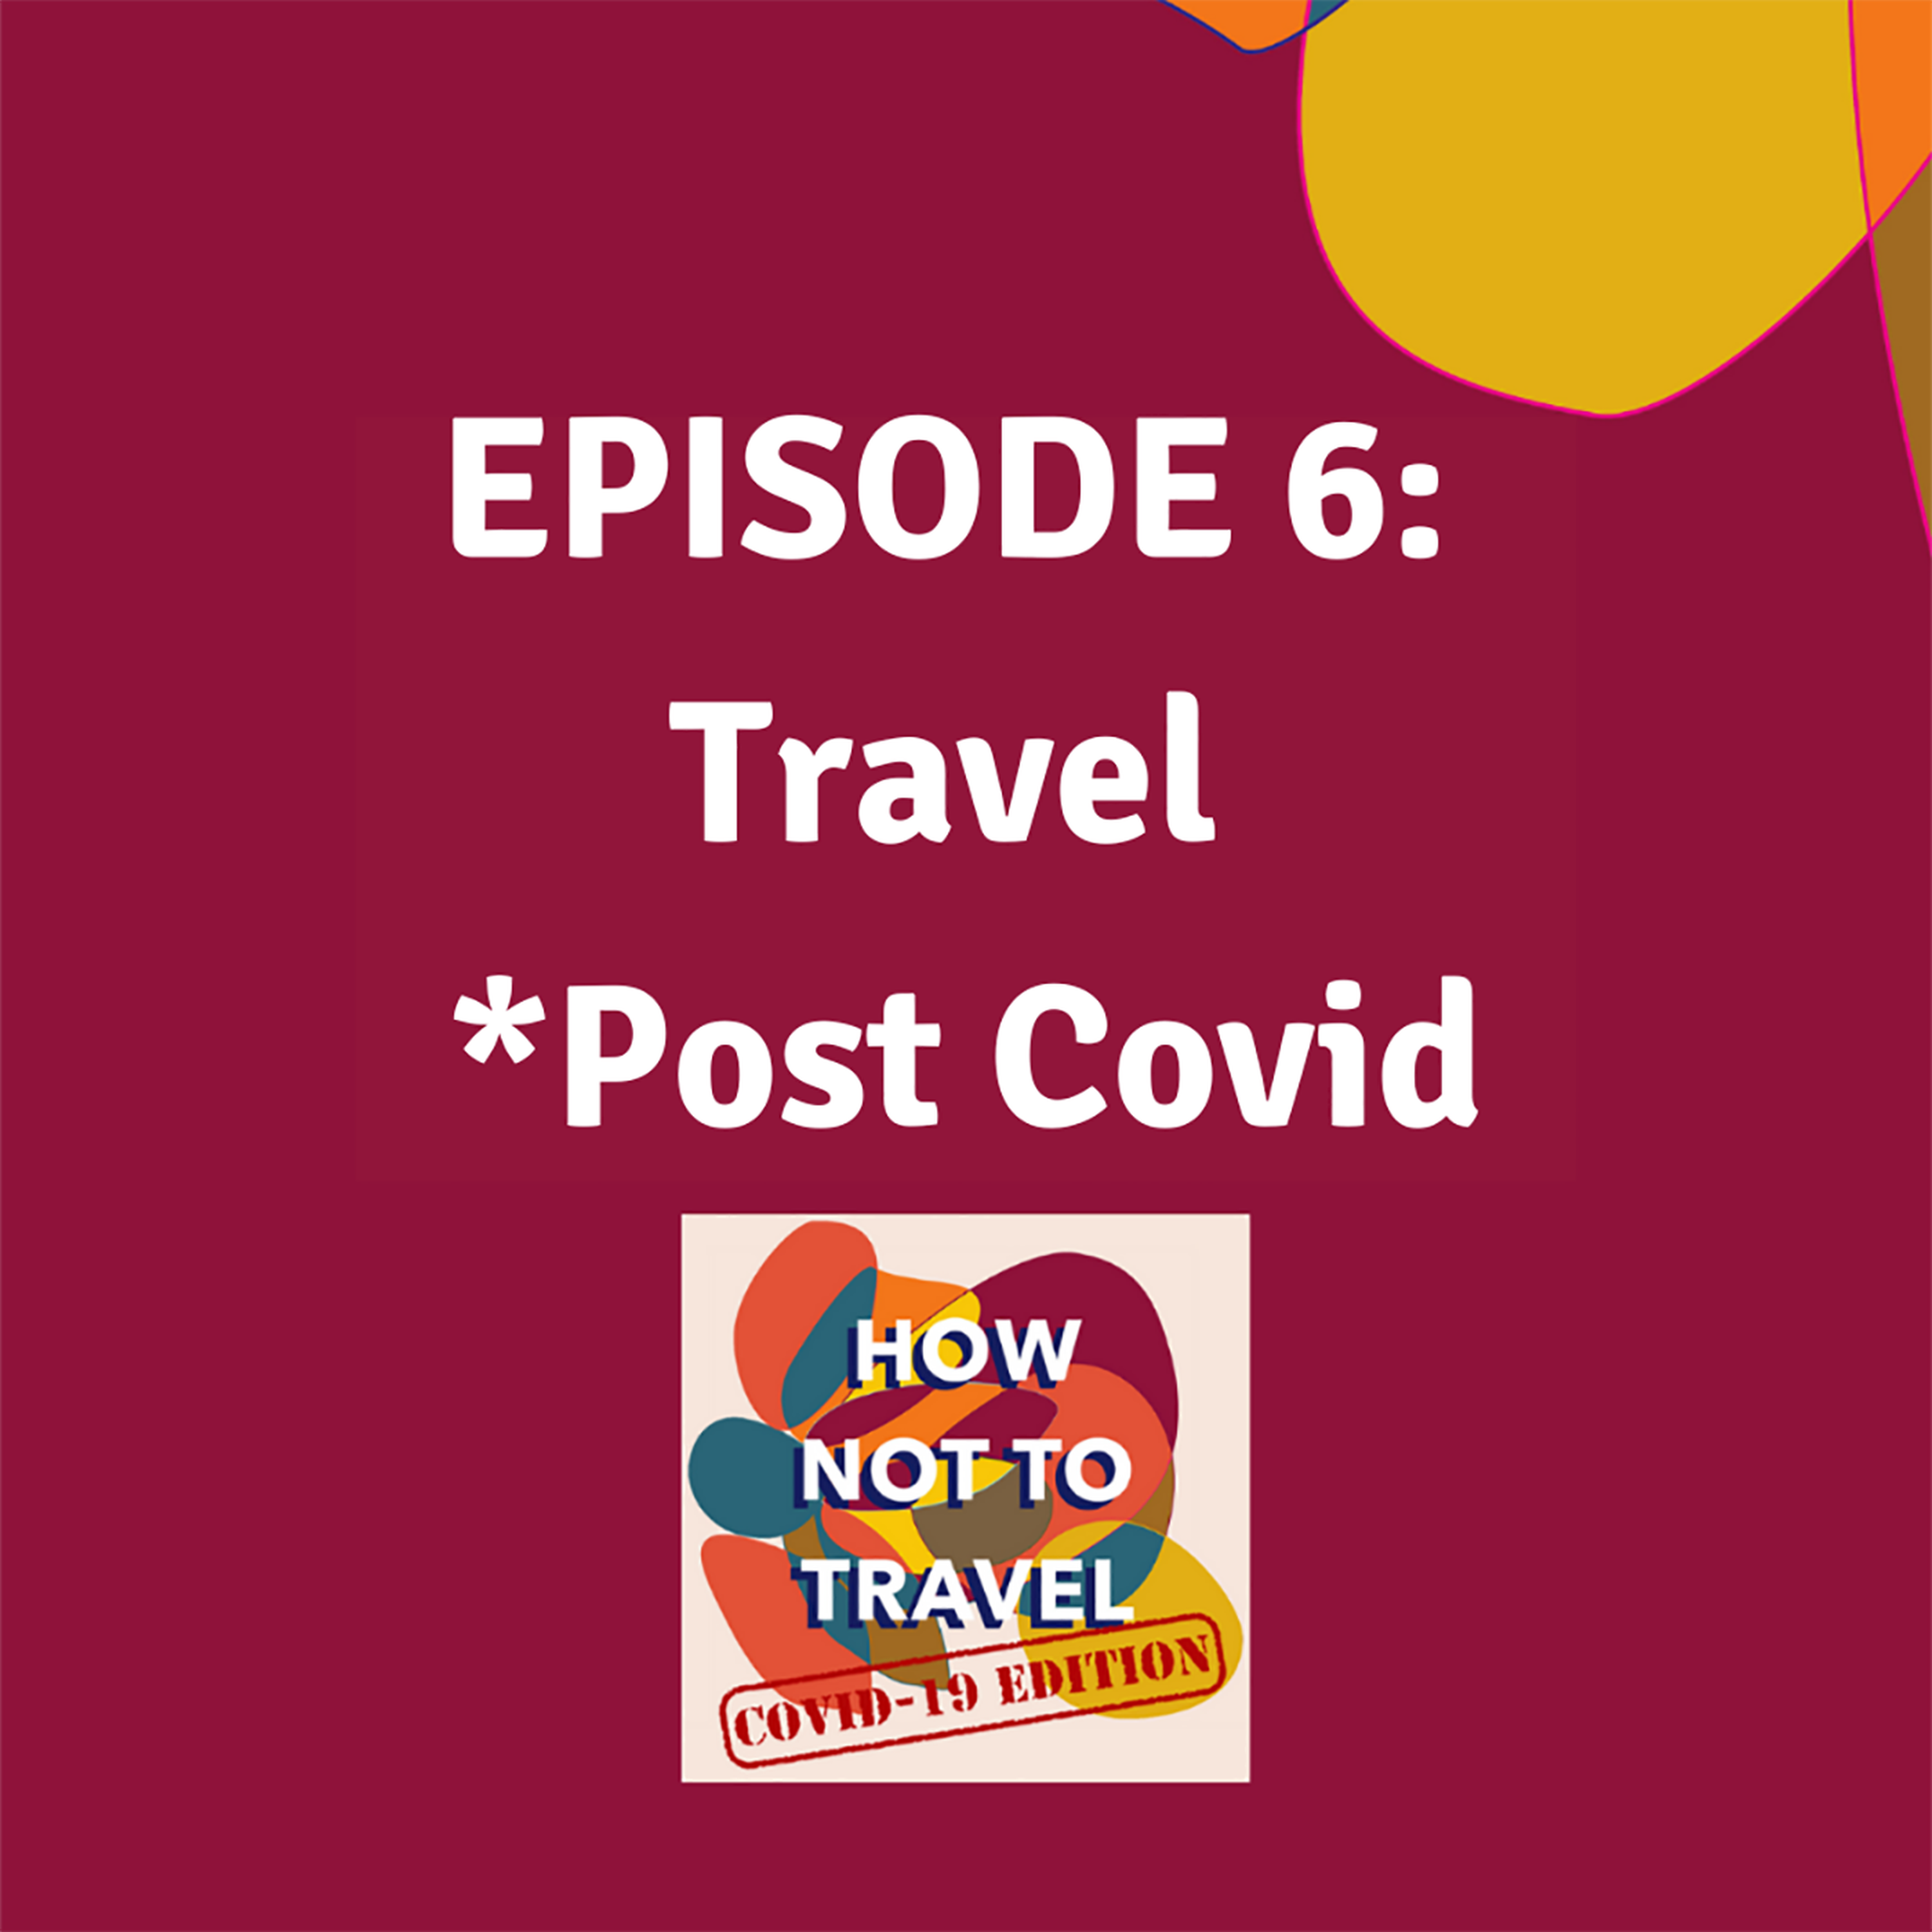 Travel *Post Covid